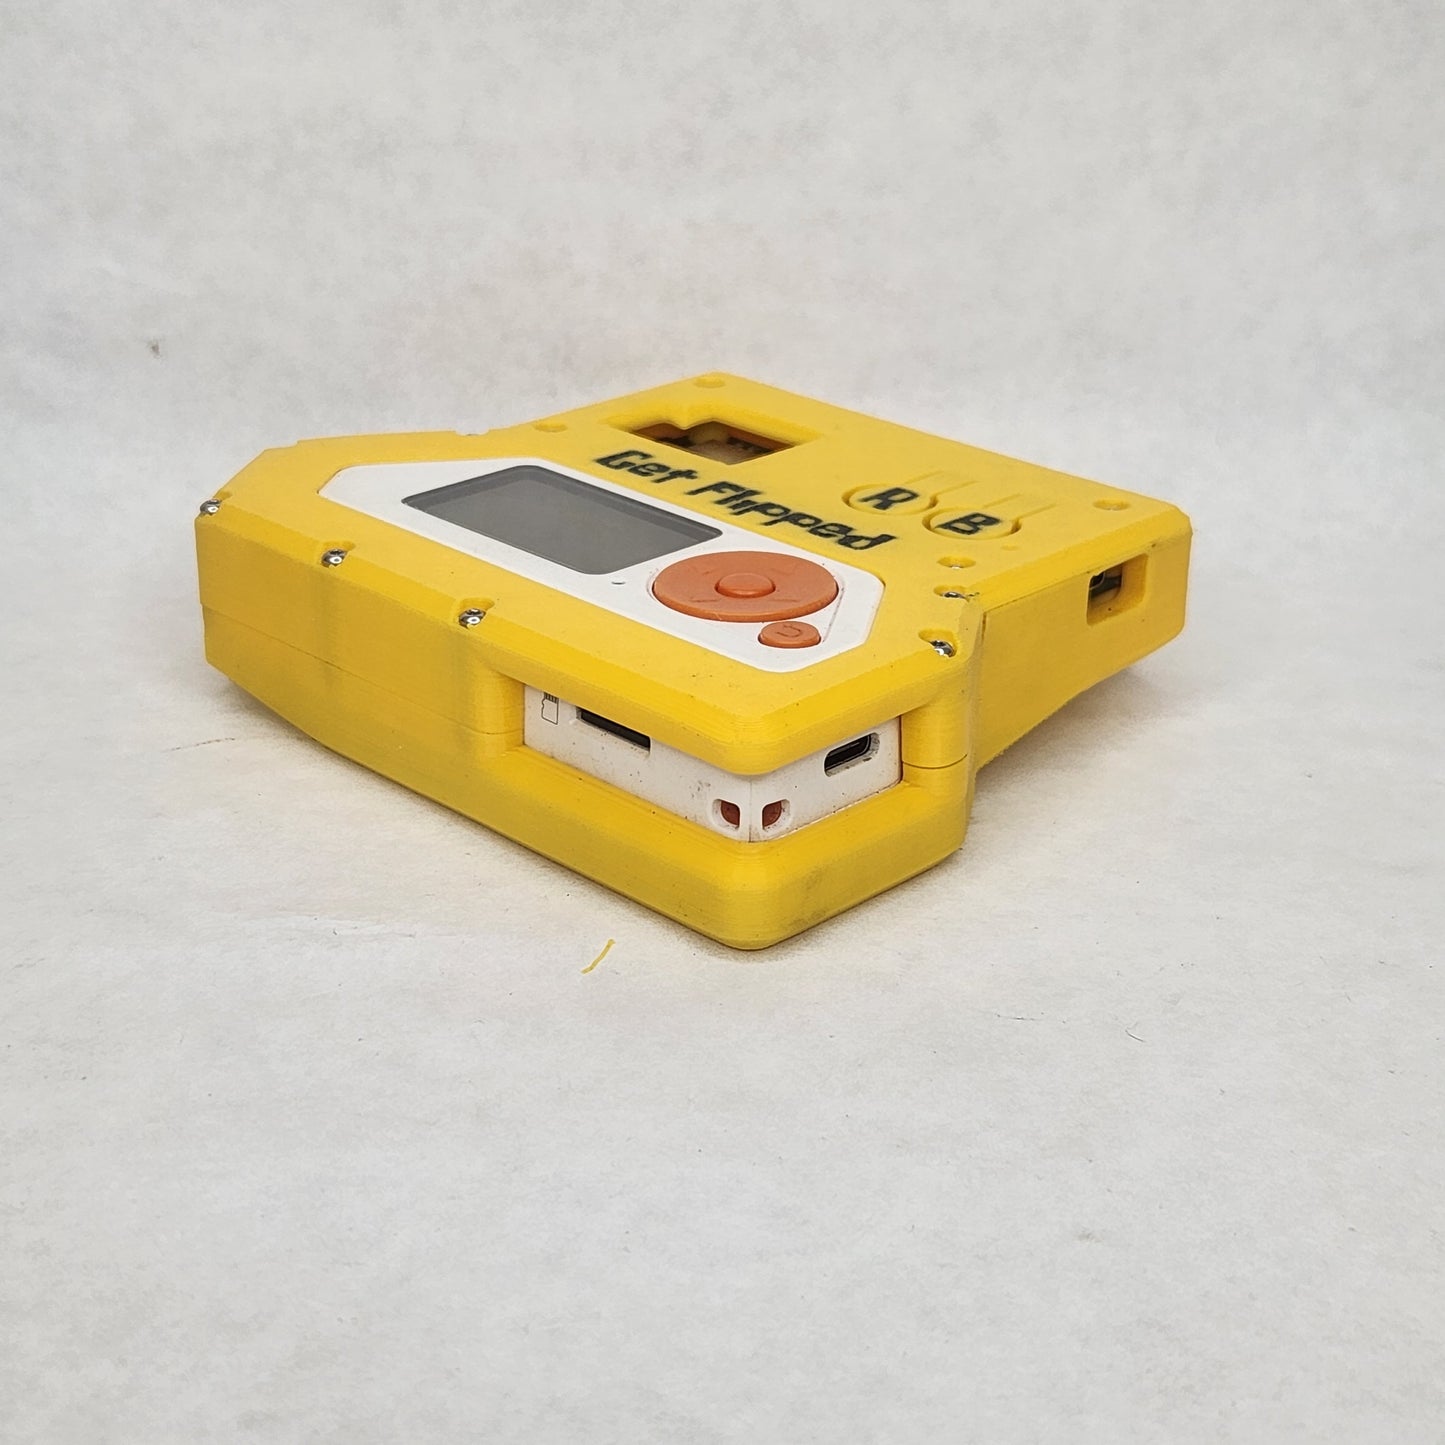  Flipper Zero Founders Edition Accessory Field Kit with Rugged  Box/WiFi Developer Board Case/Desk Cradle : Handmade Products